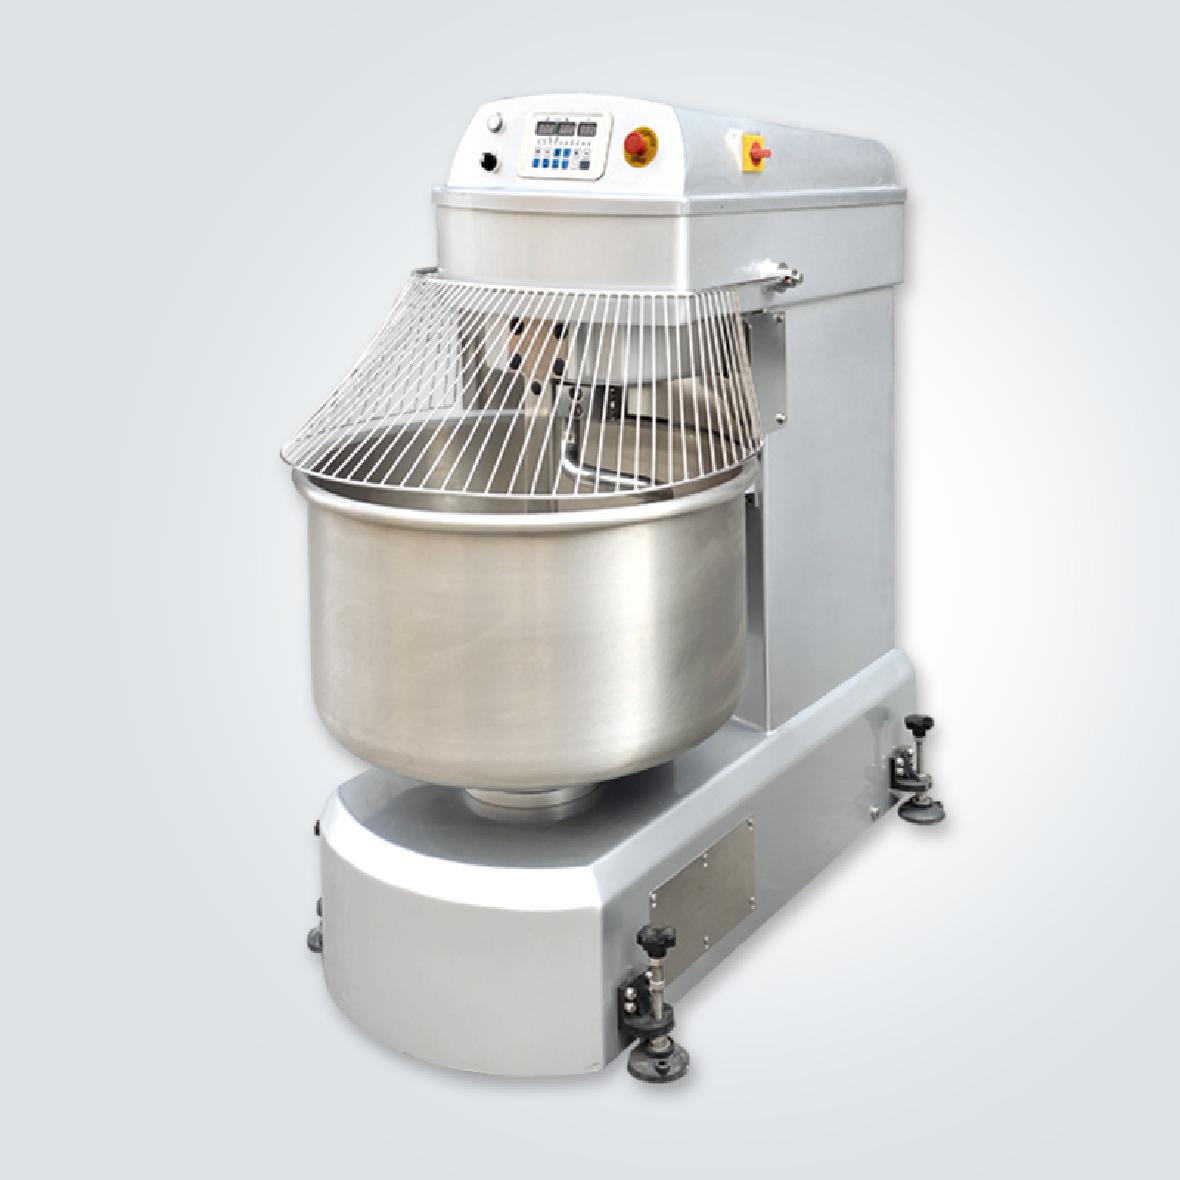 Dough Mixer SM-75 - Spiral dough mixers. Sammic Dynamic Preparation